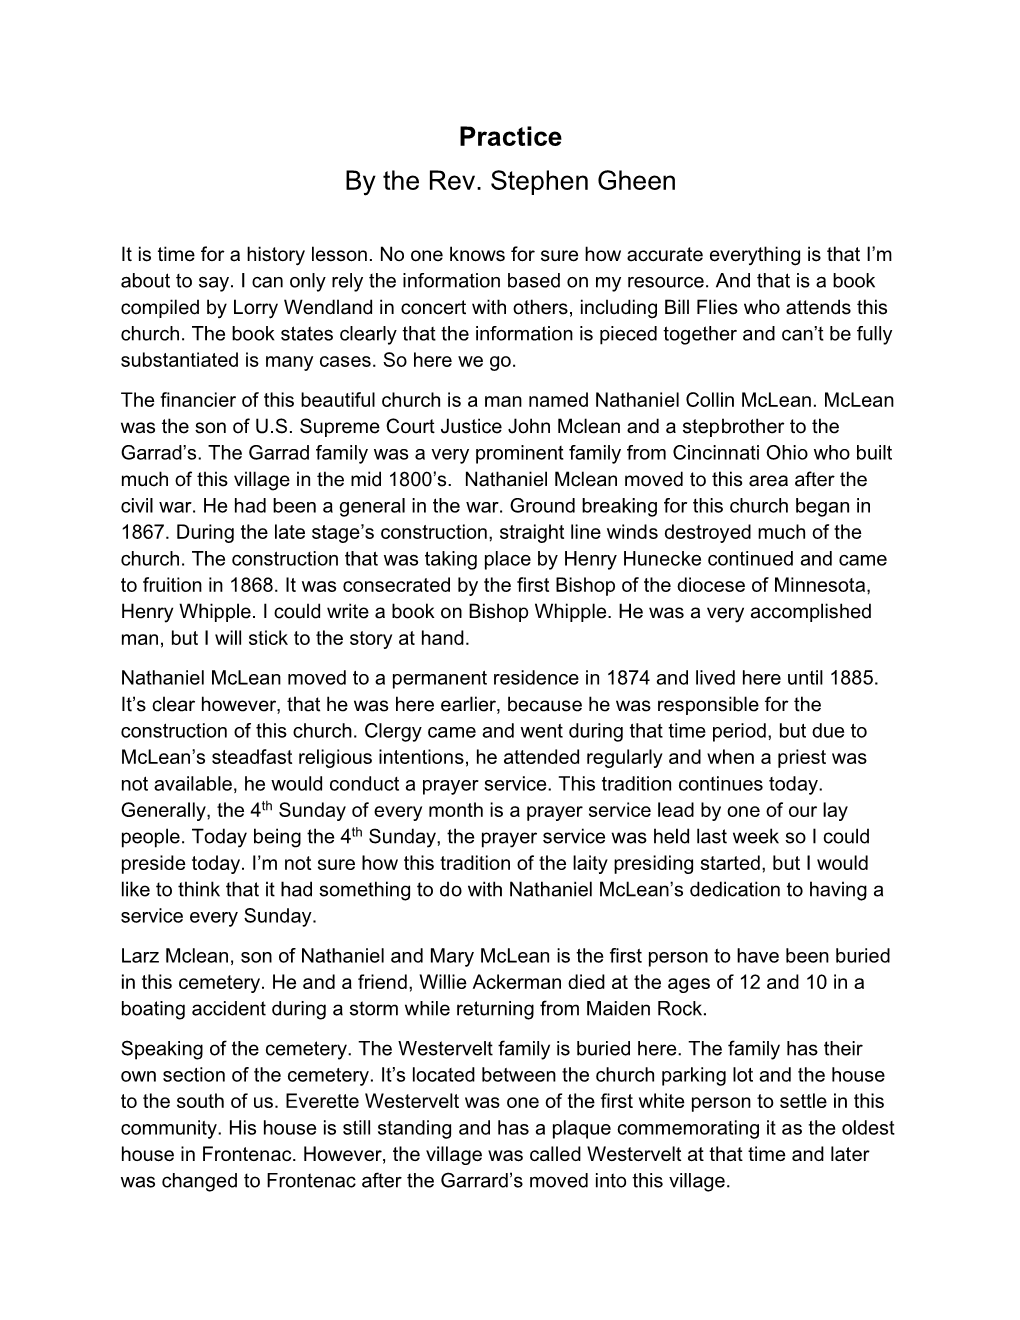 Practice by the Rev. Stephen Gheen